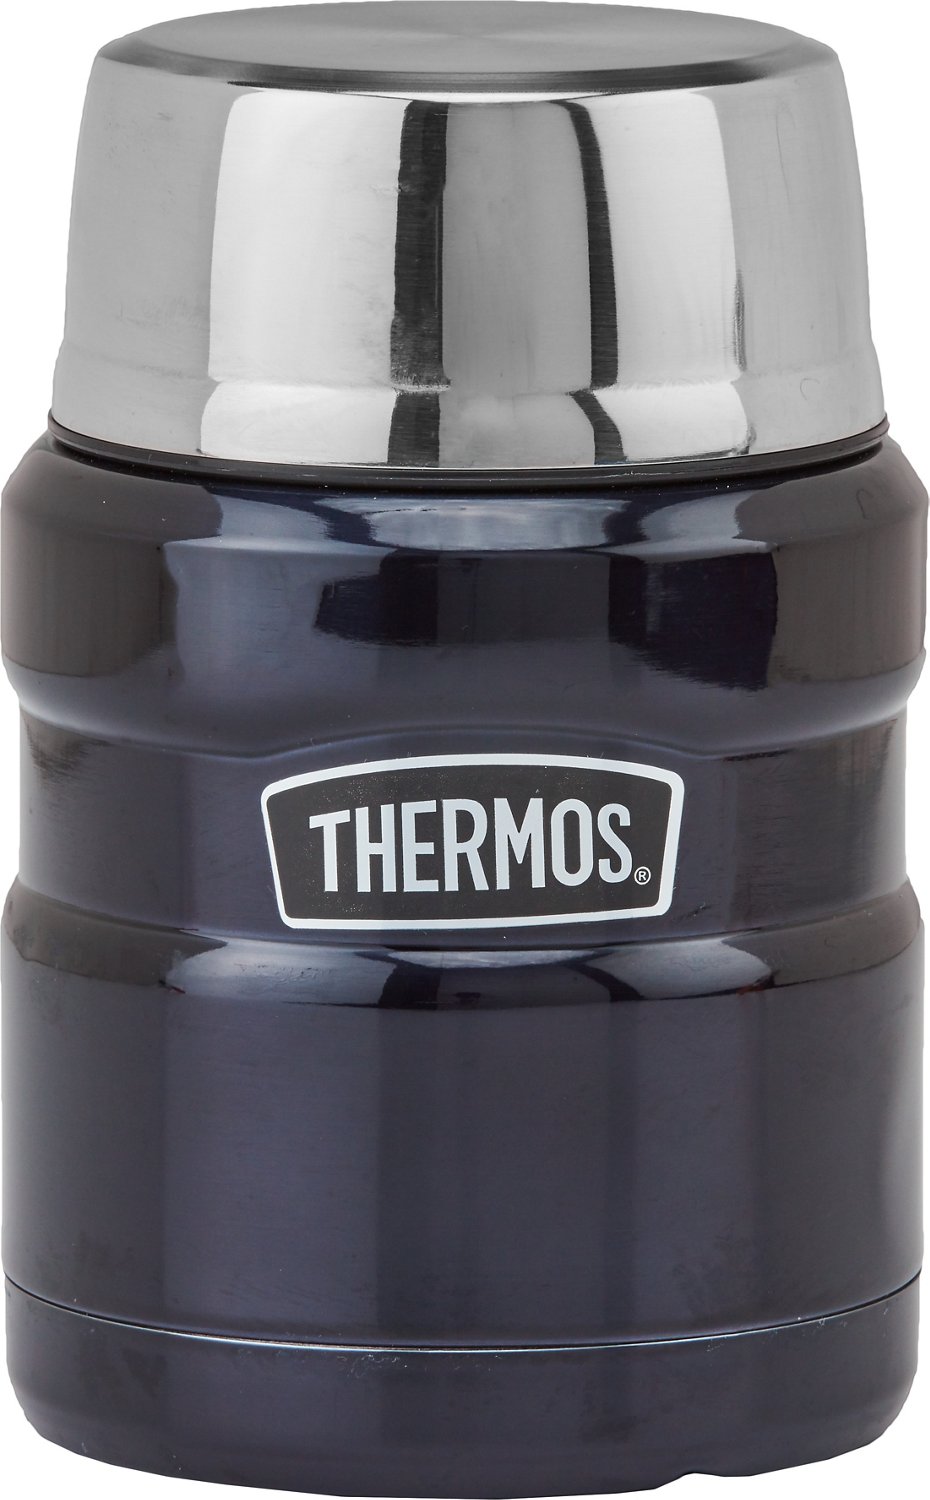 Thermos nissan vacuum insulated food jar